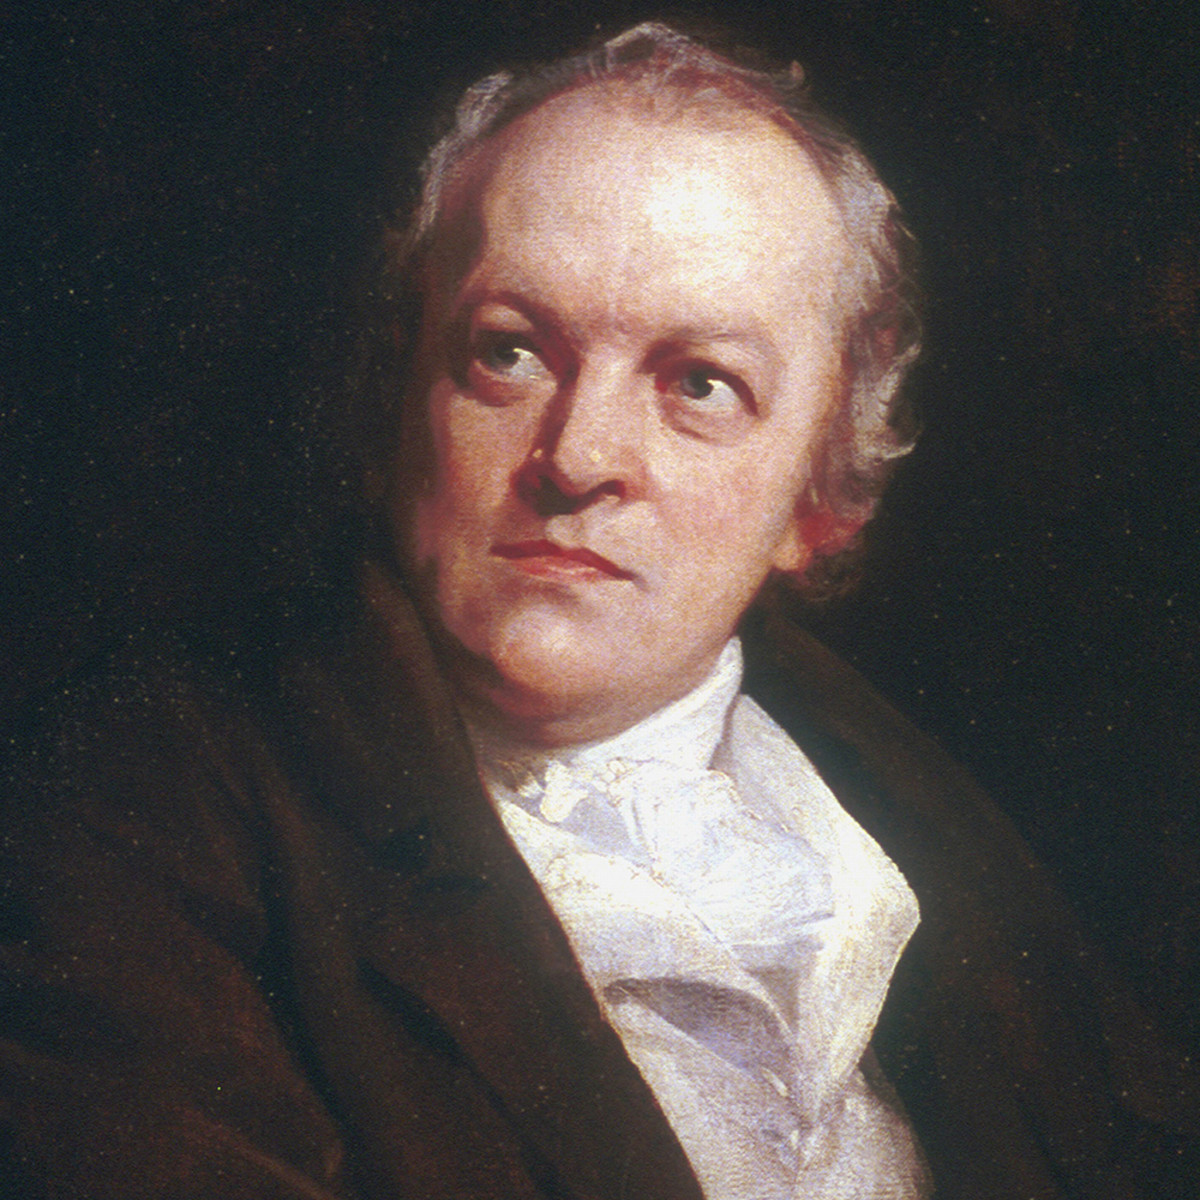 William Blake's image